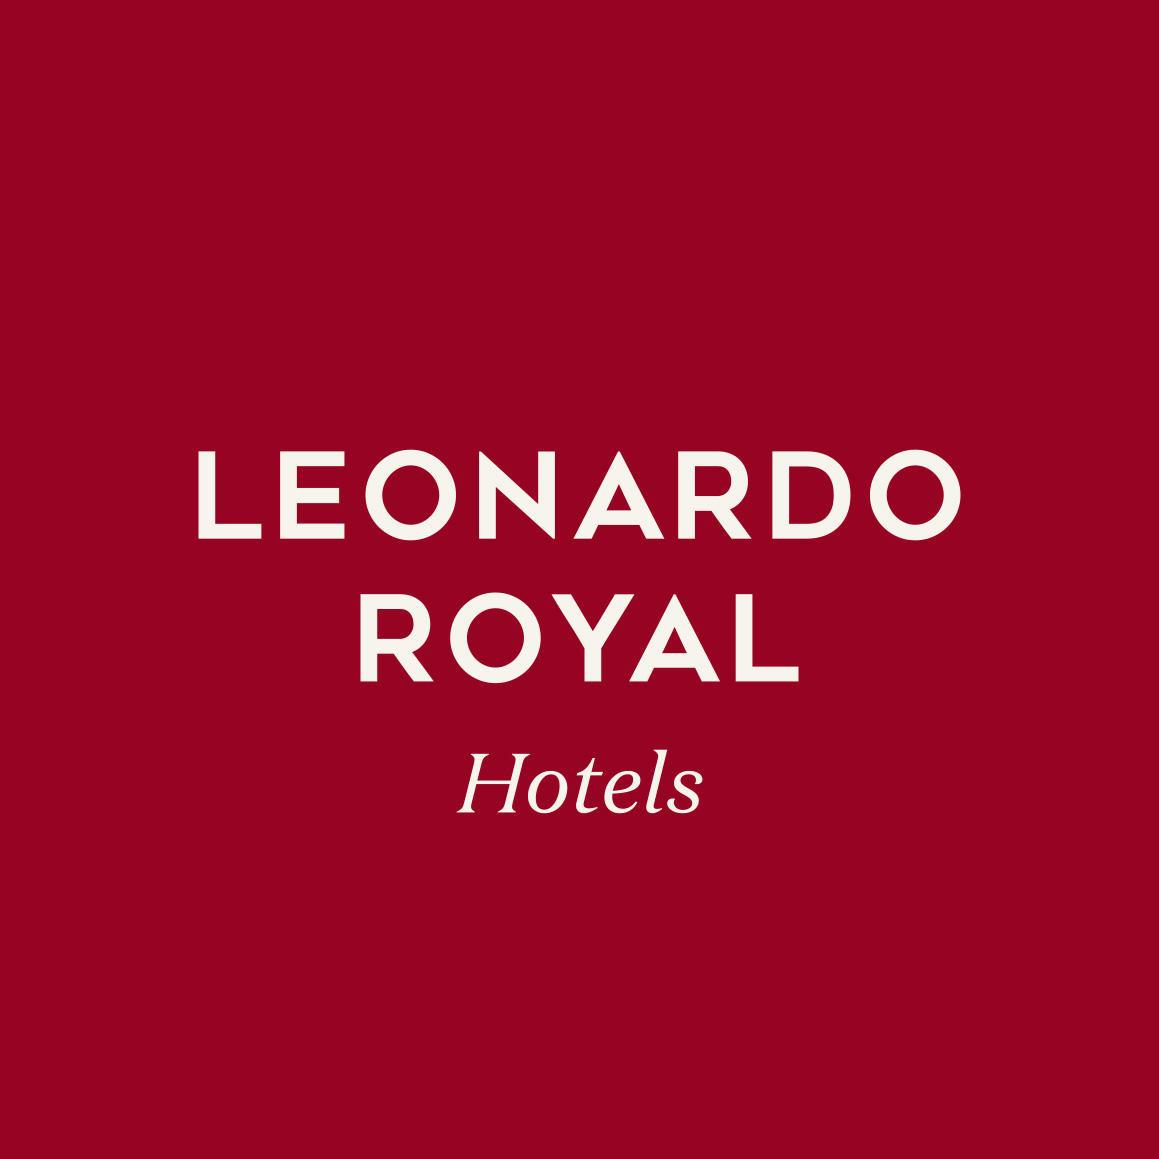 Leonardo Royal Hotel London Tower Bridge Logo